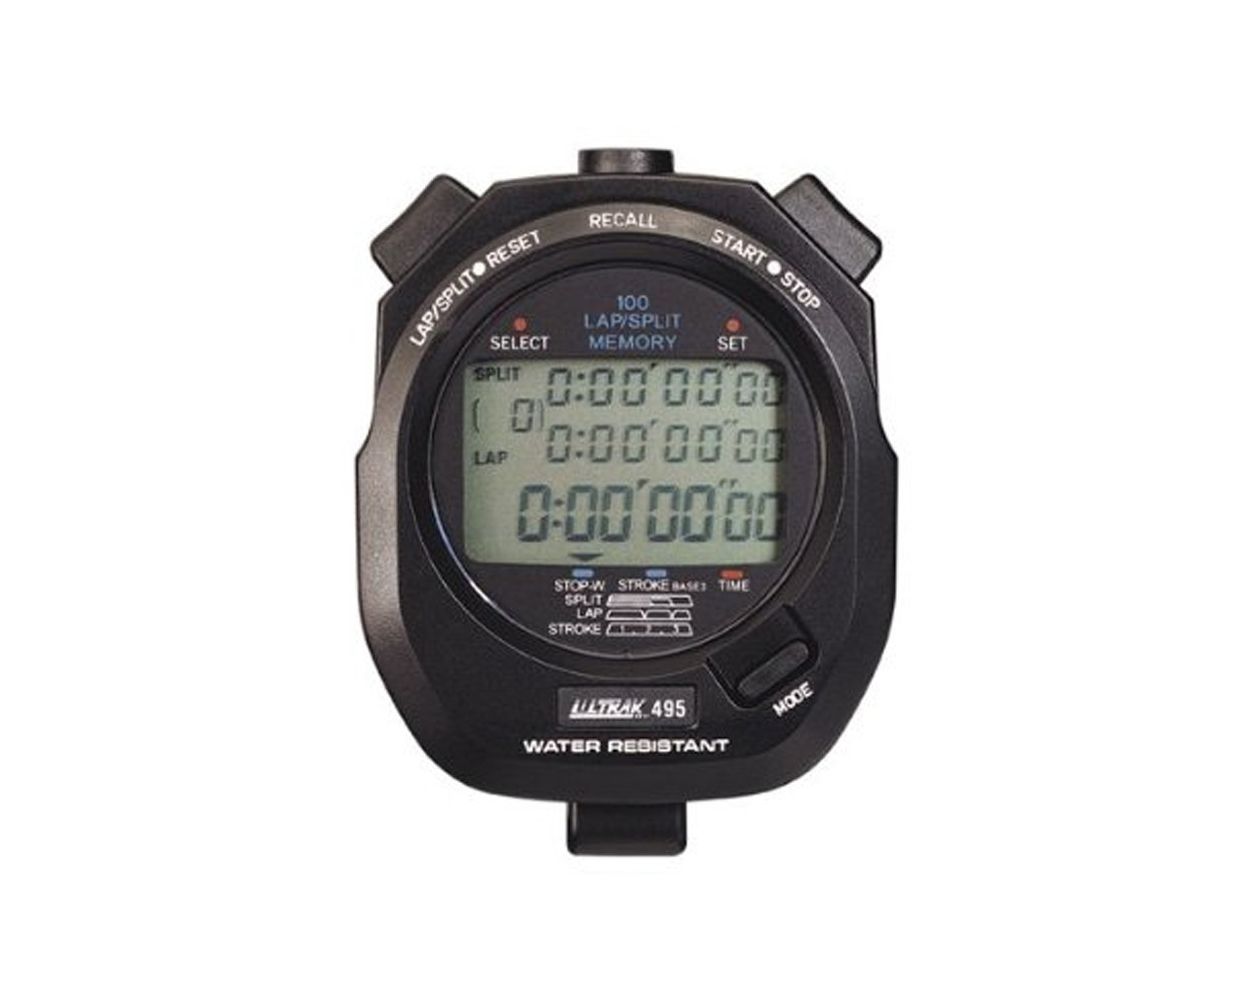 JS-9001 Professional Stopwatch /10 Lap Memory/ Water Resistant Big LCD Panel